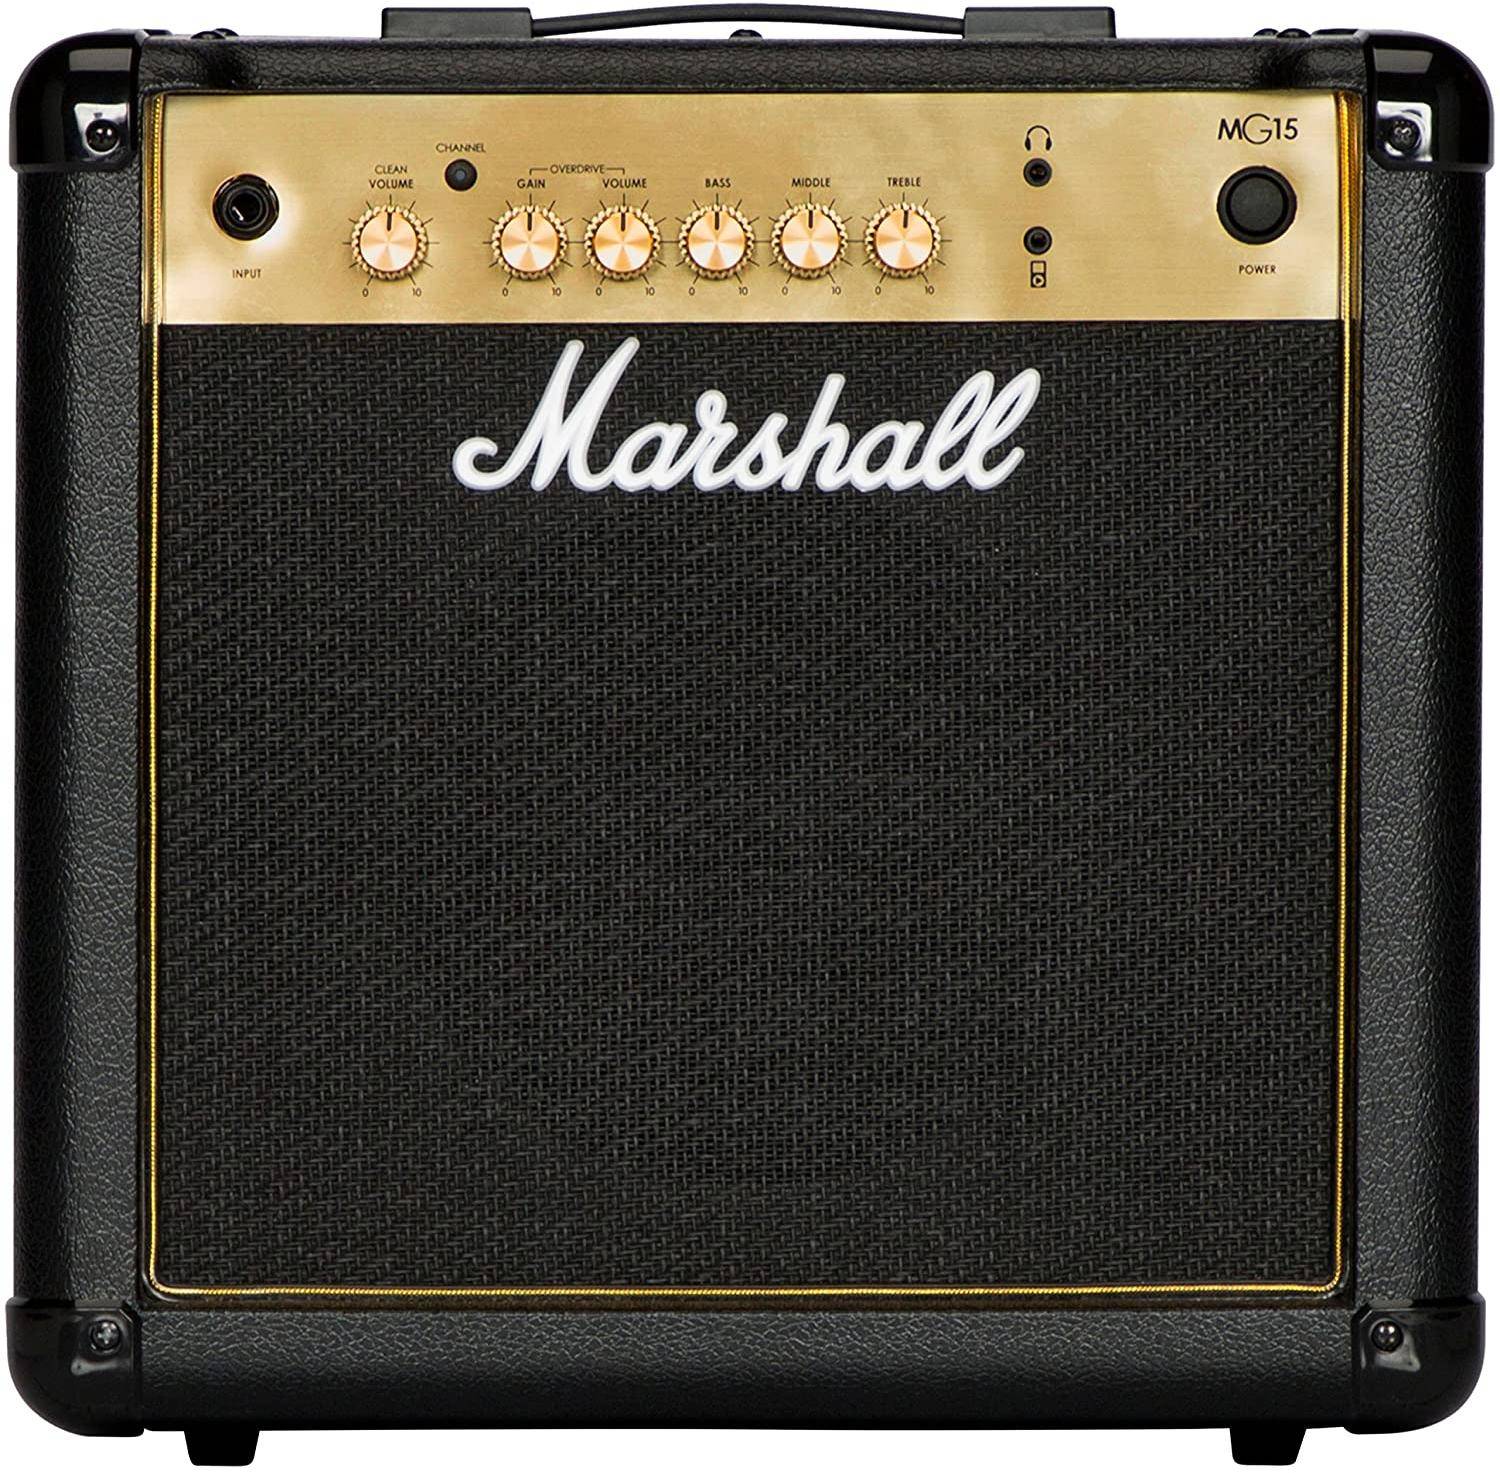 Marshall MG15G Amplifier for Guitars zoom image